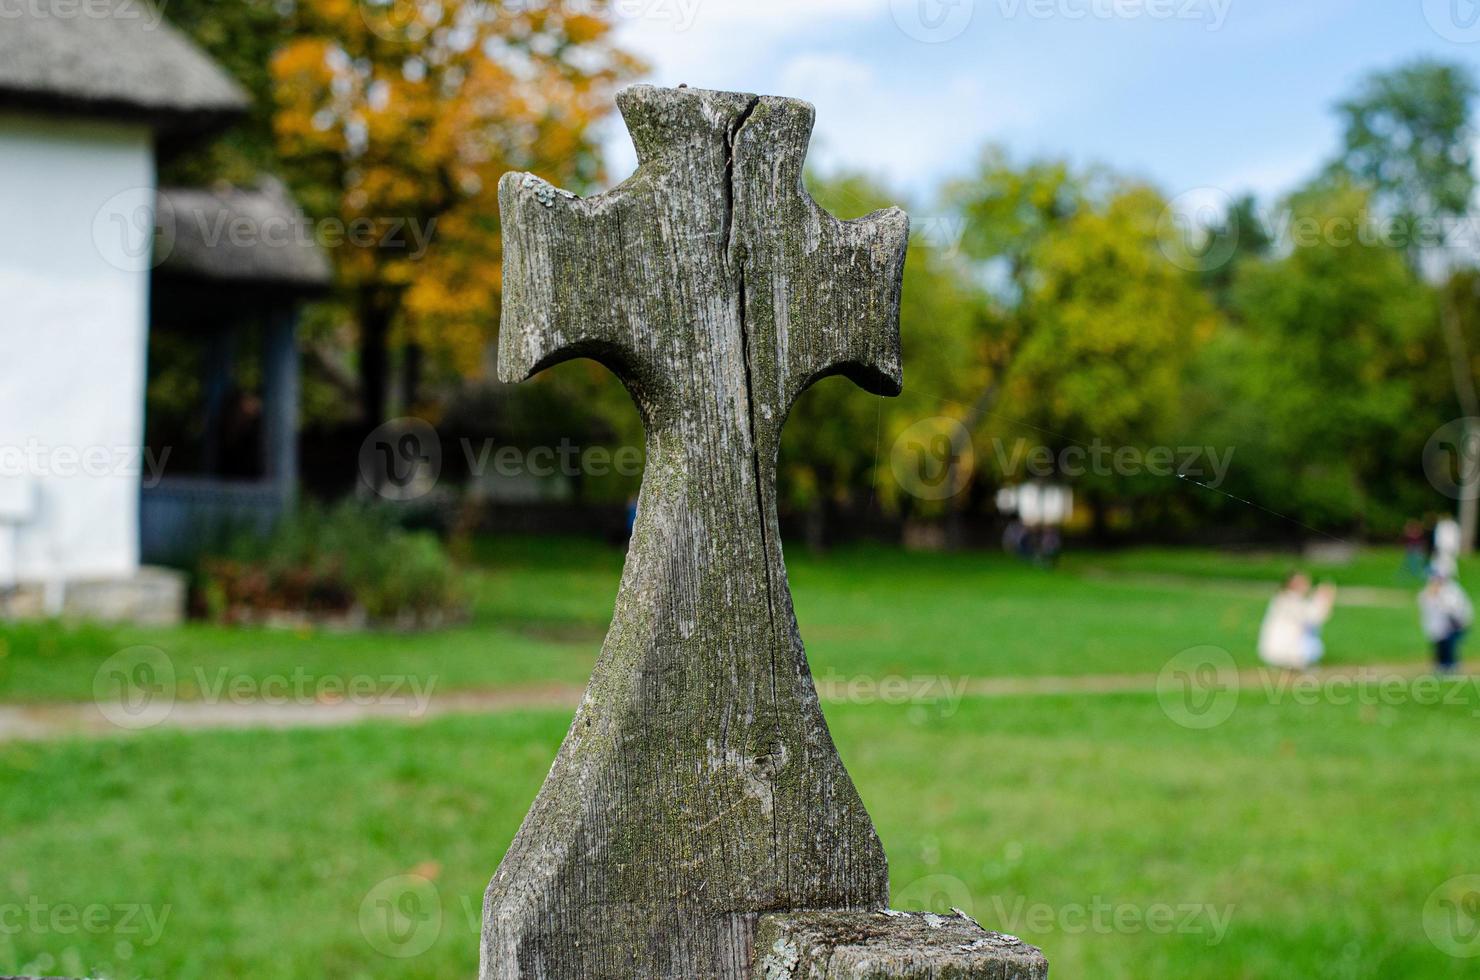 antigua cruz de madera en la cerca foto